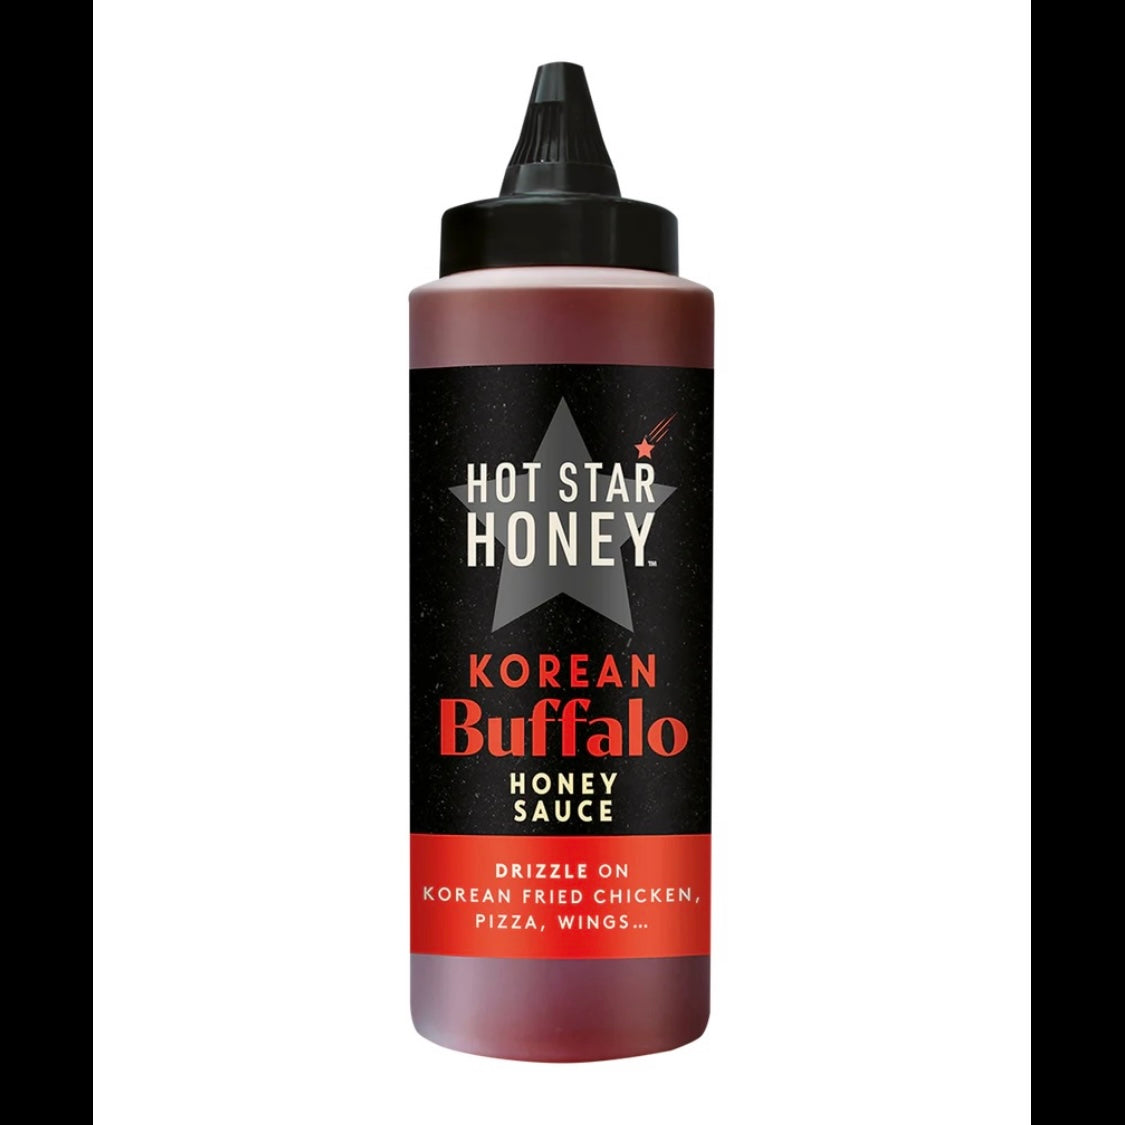 Korean Buffalo Honey Sauce